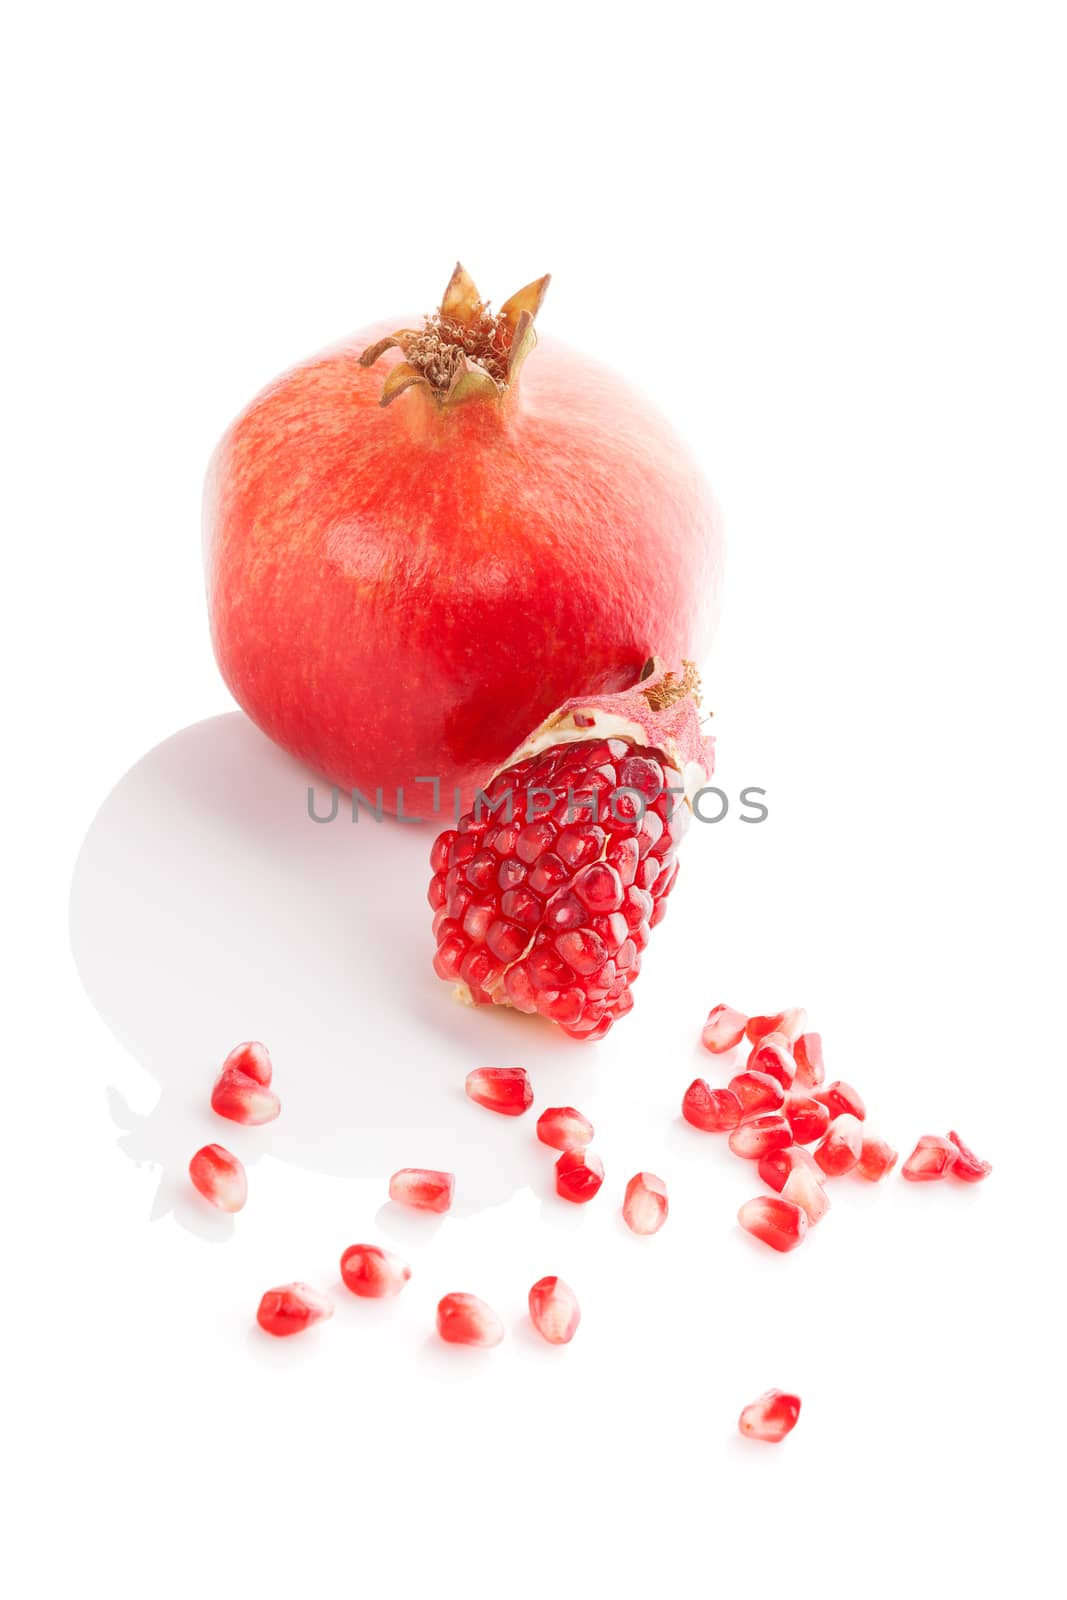 Pomegranate isolated on white background. Healthy fruit eating.